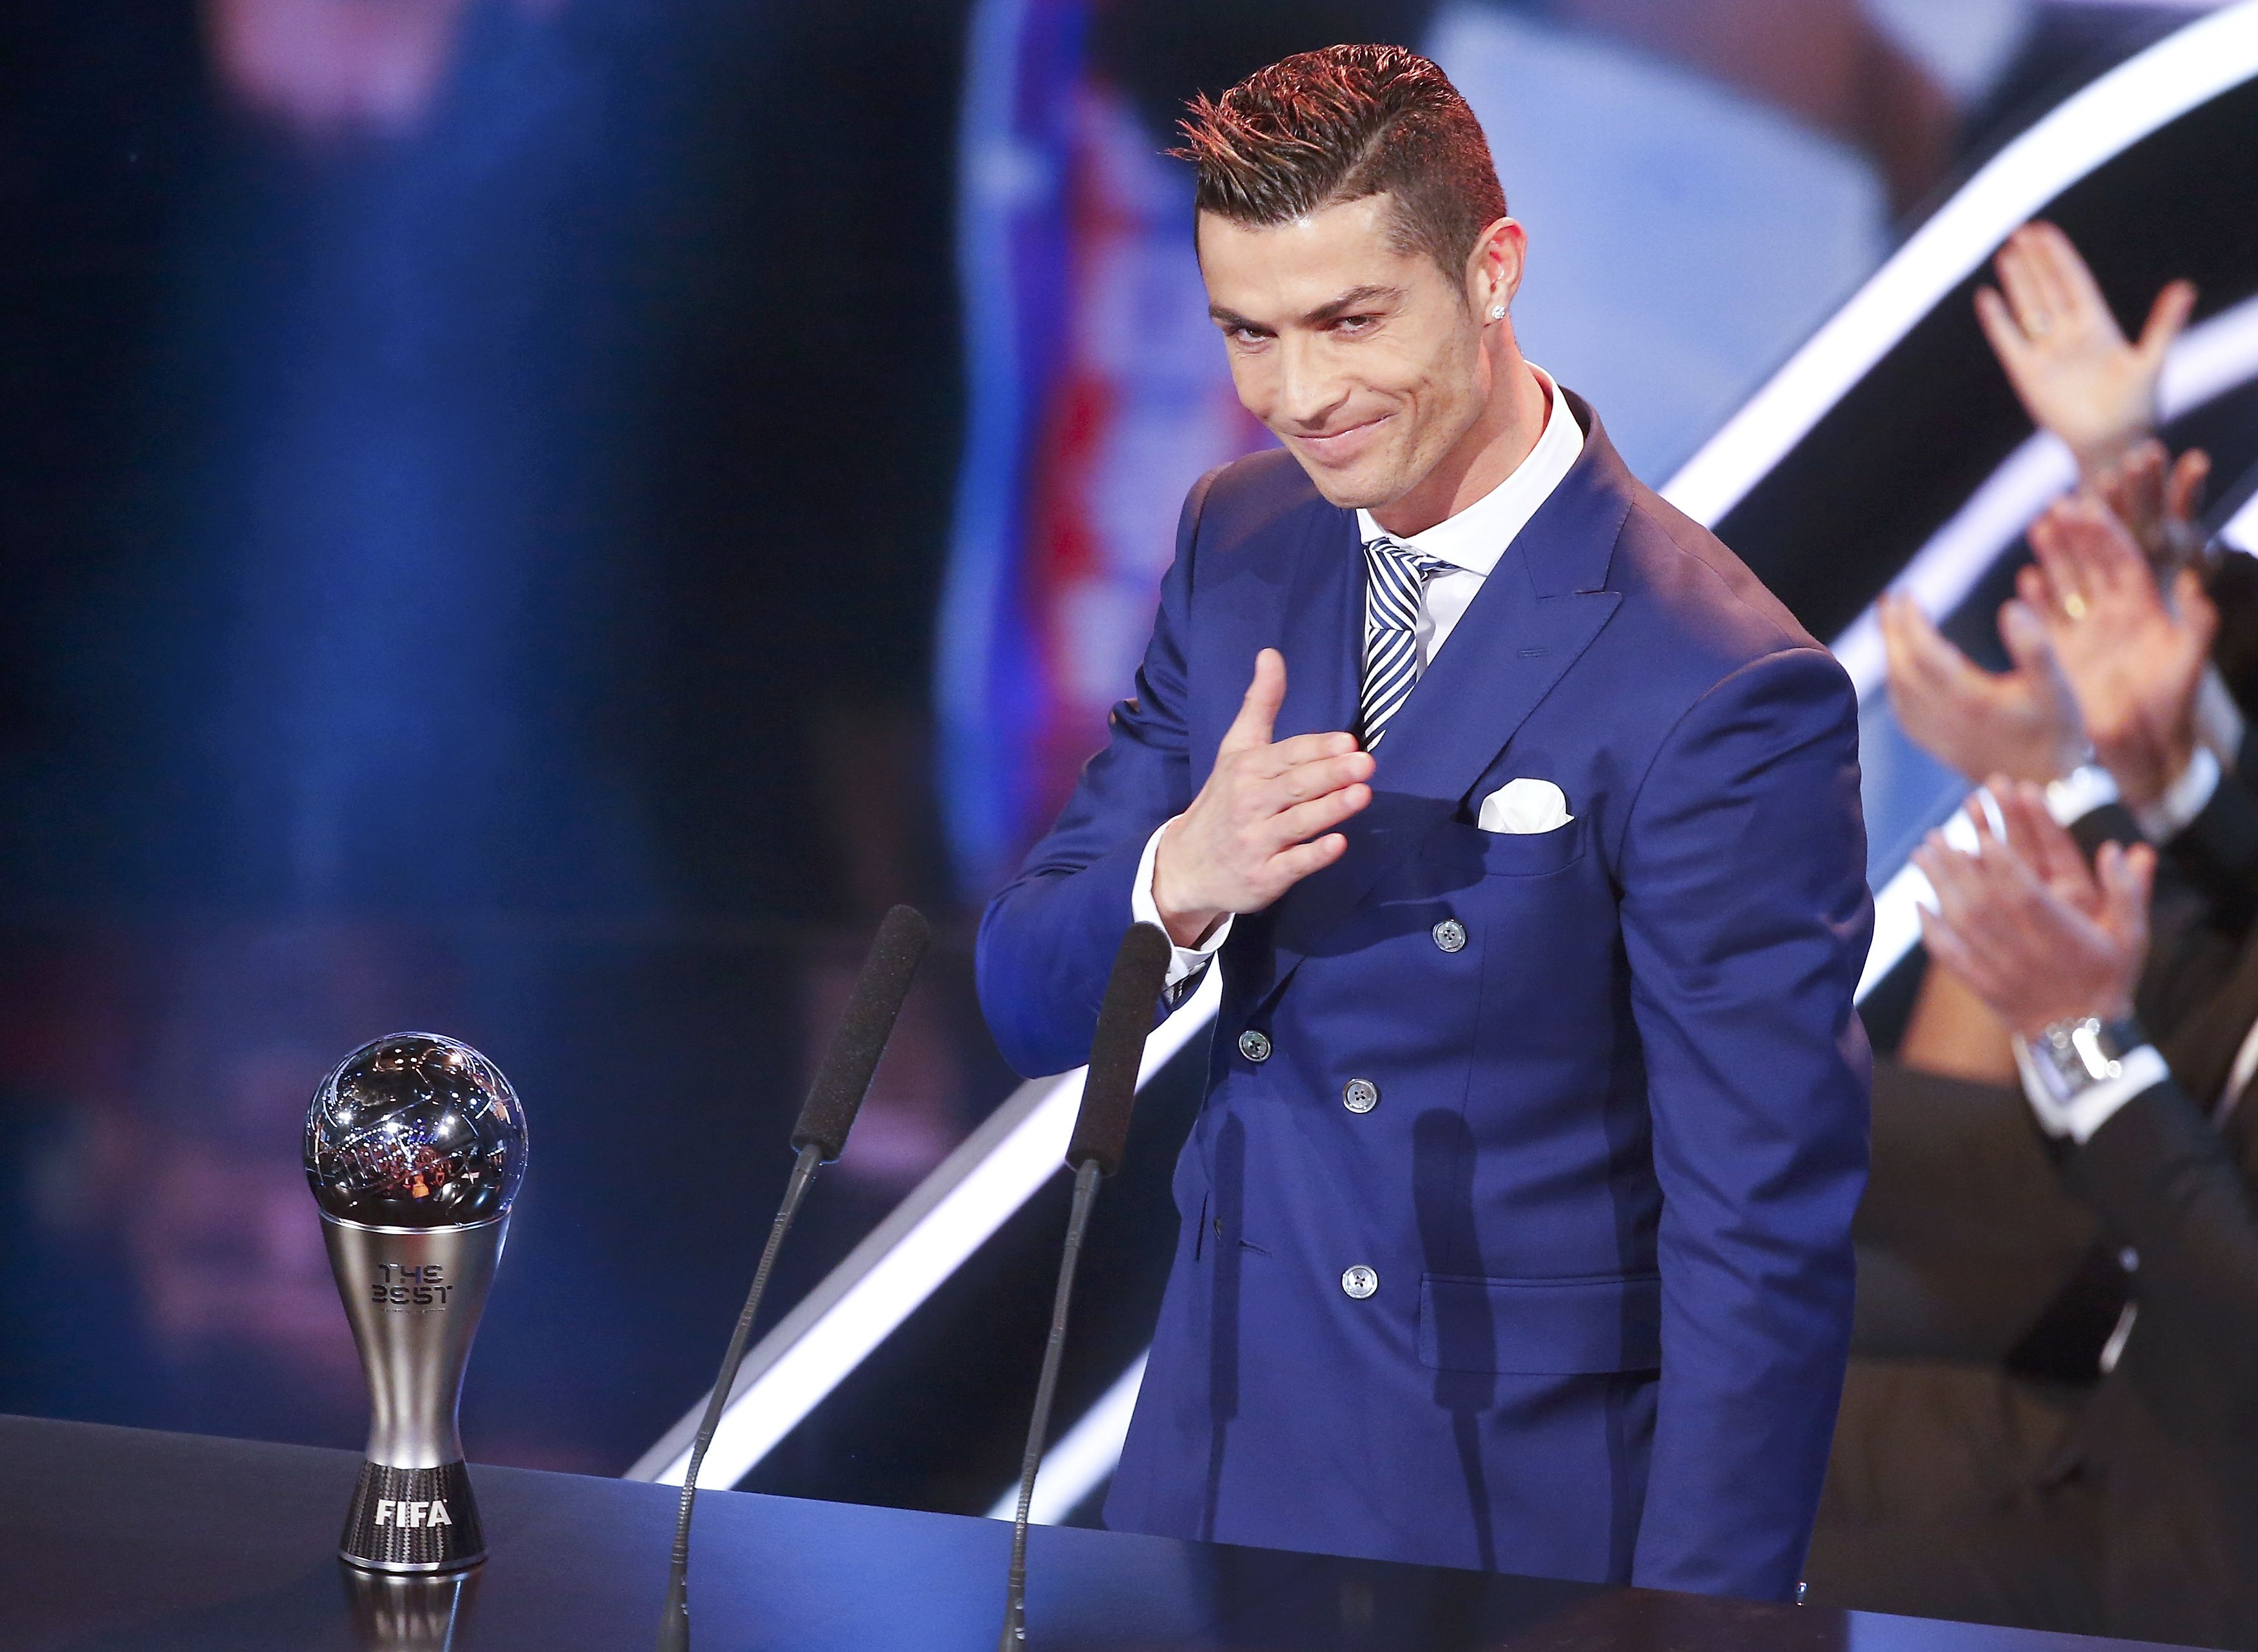 Portugal celebra el premio de la FIFA conquistado por Cristiano Ronaldo